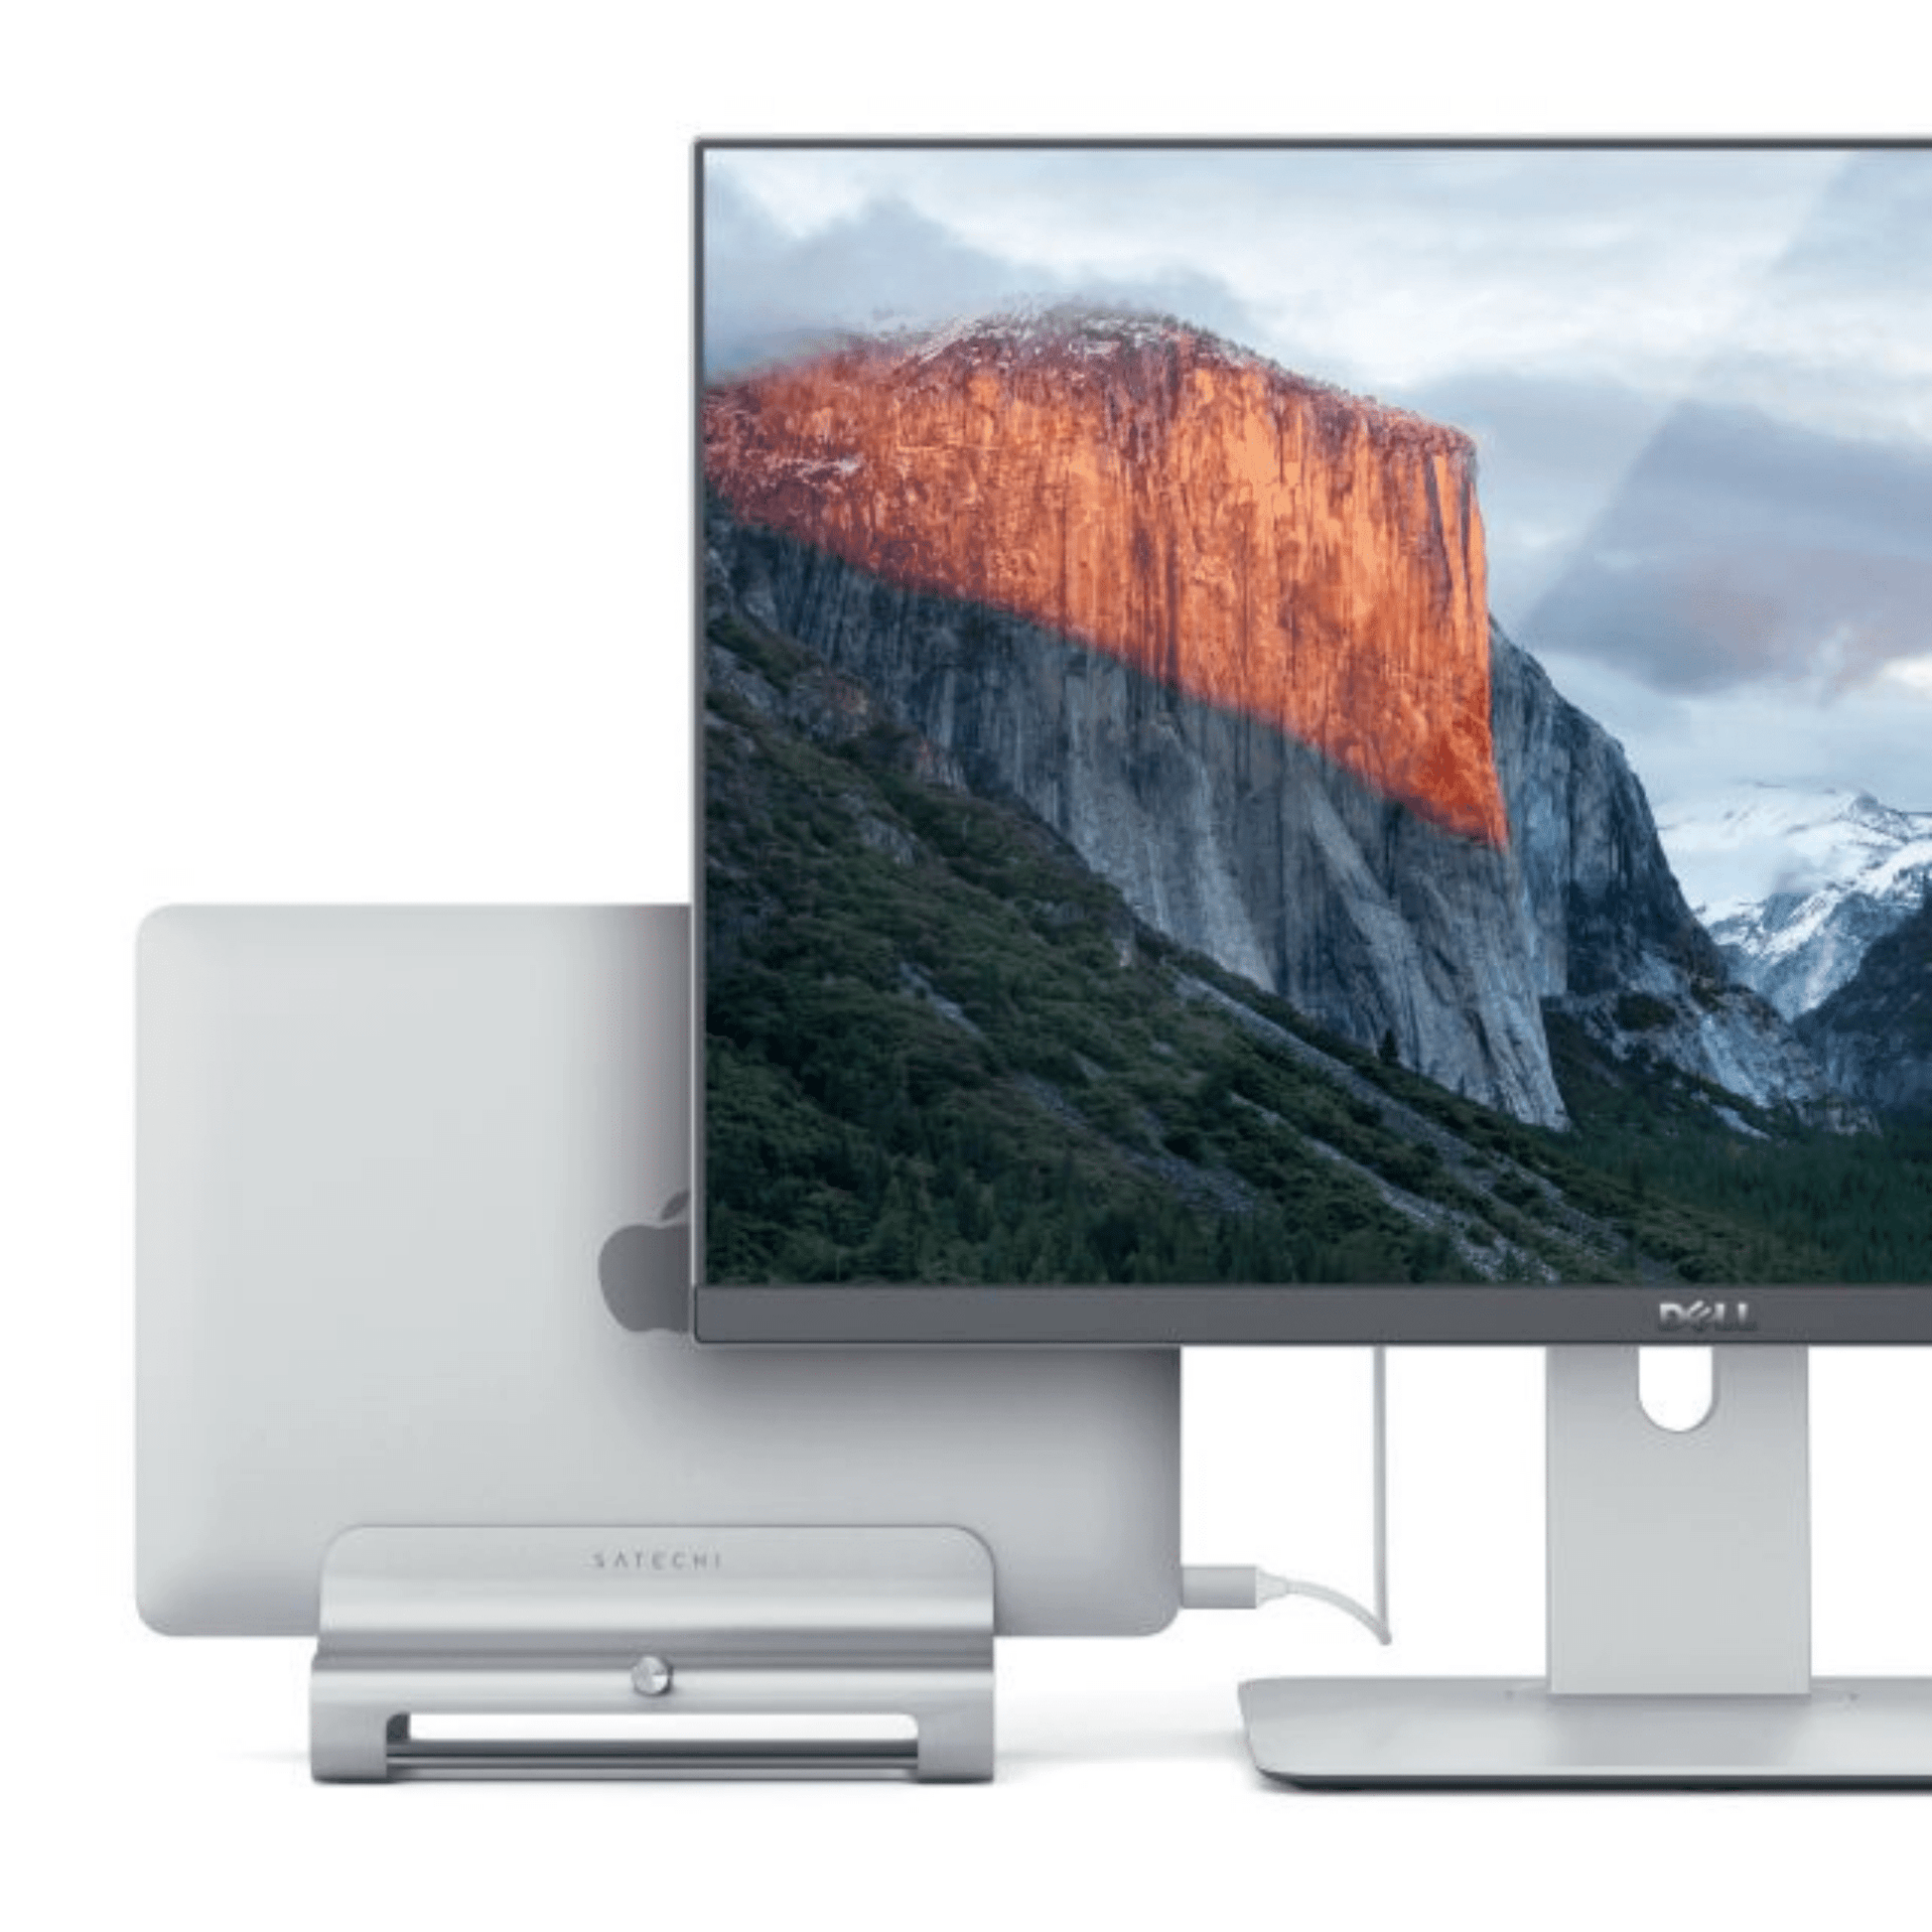 Satechi - Edler & eleganter vertikal Aluminium Laptop Ständer passend zu MacBooks & Laptops - Silber